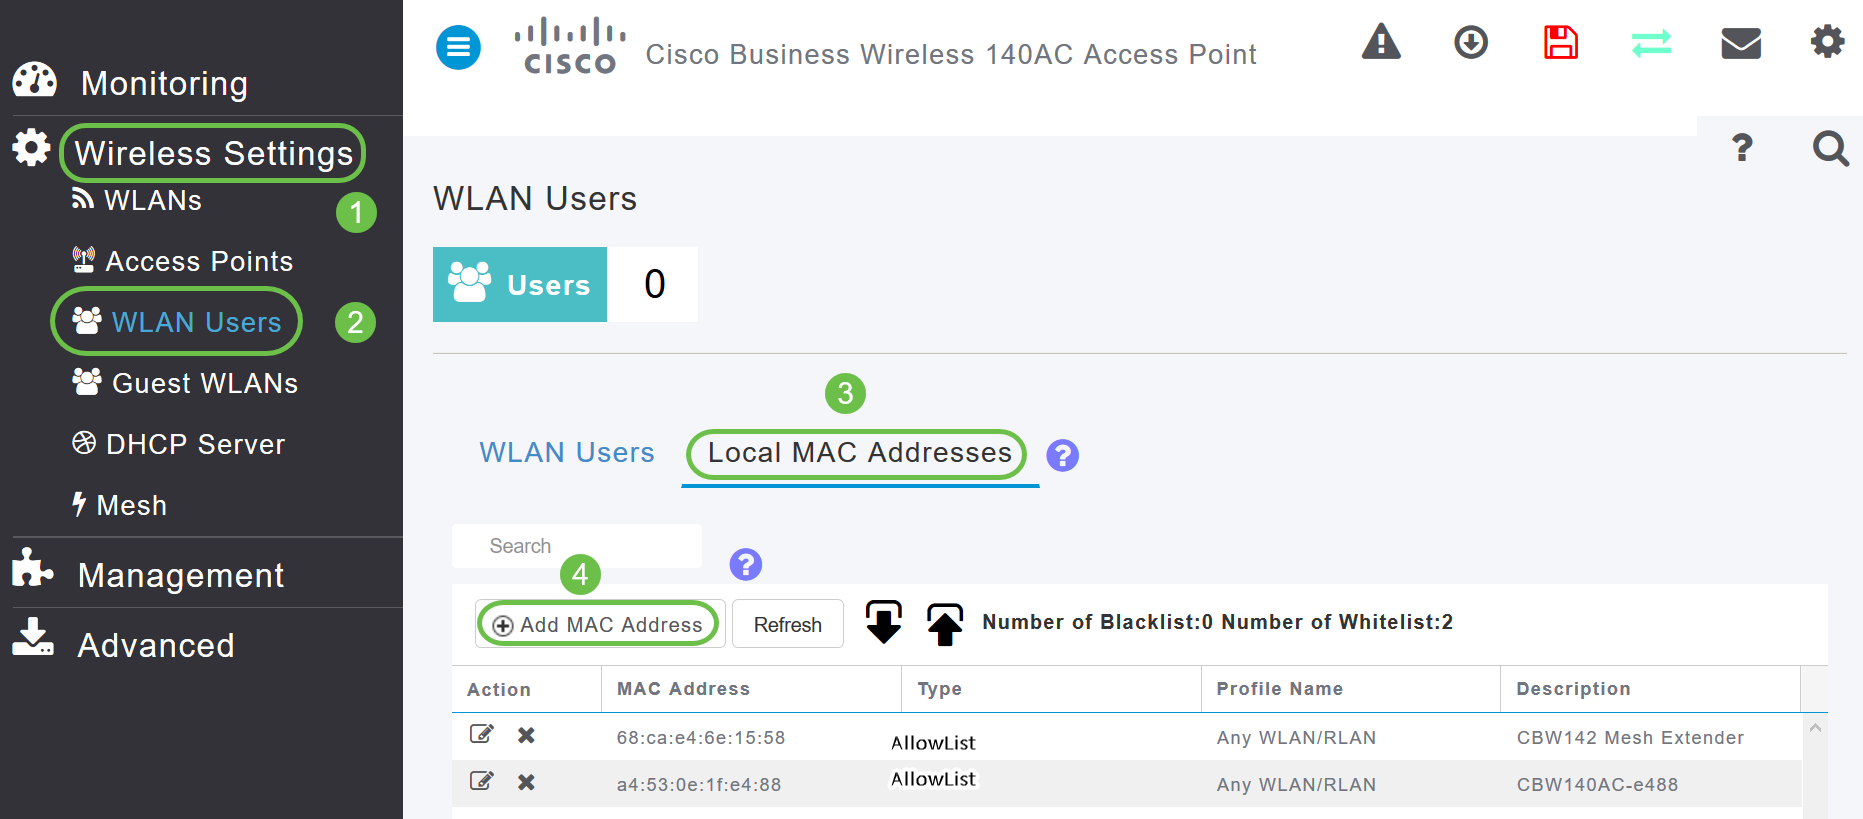 Navigate to Wireless Settings > WLAN Users > Local MAC Addresses. Click Add MAC Address.